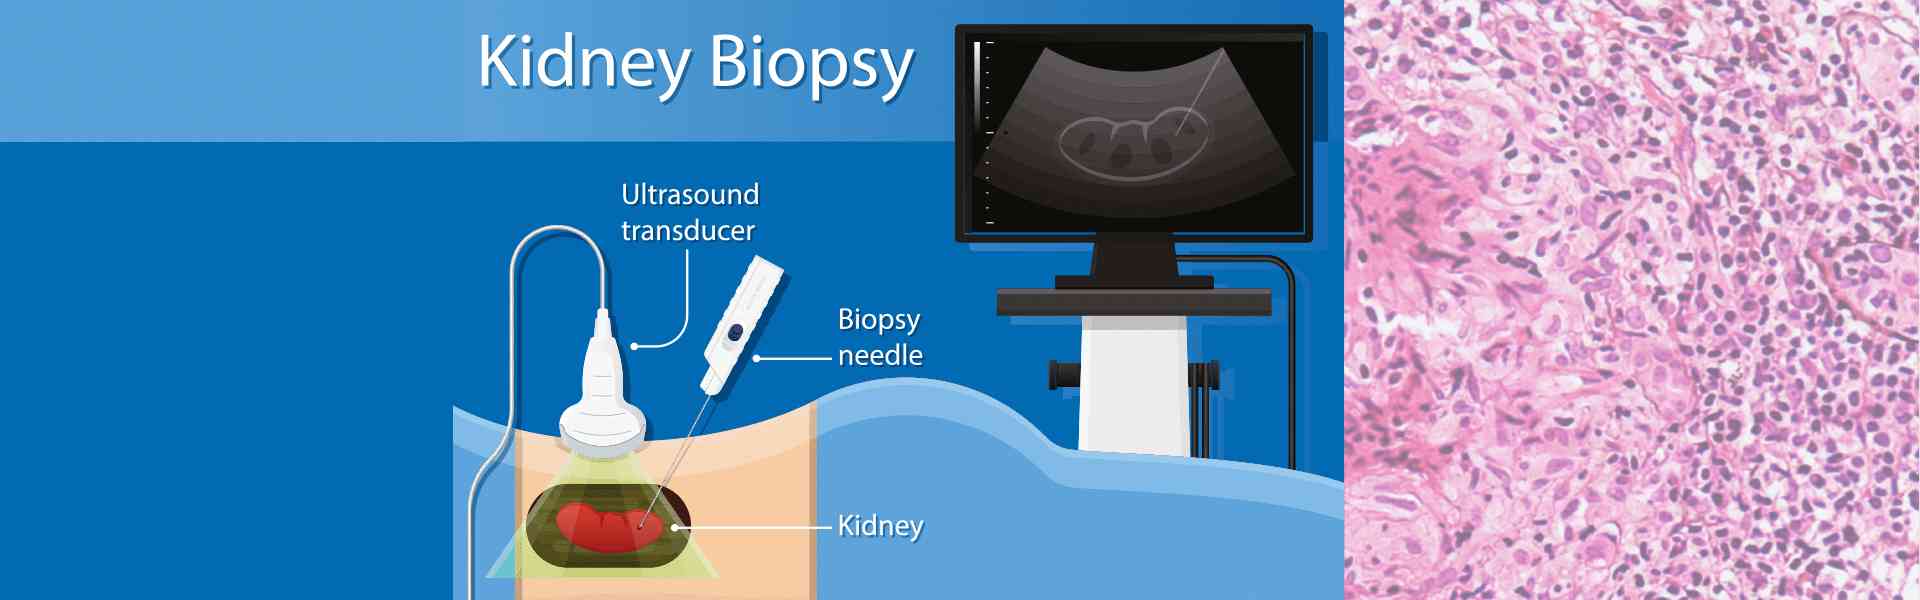 Kidney Biopsy Treatment in Jayanagar